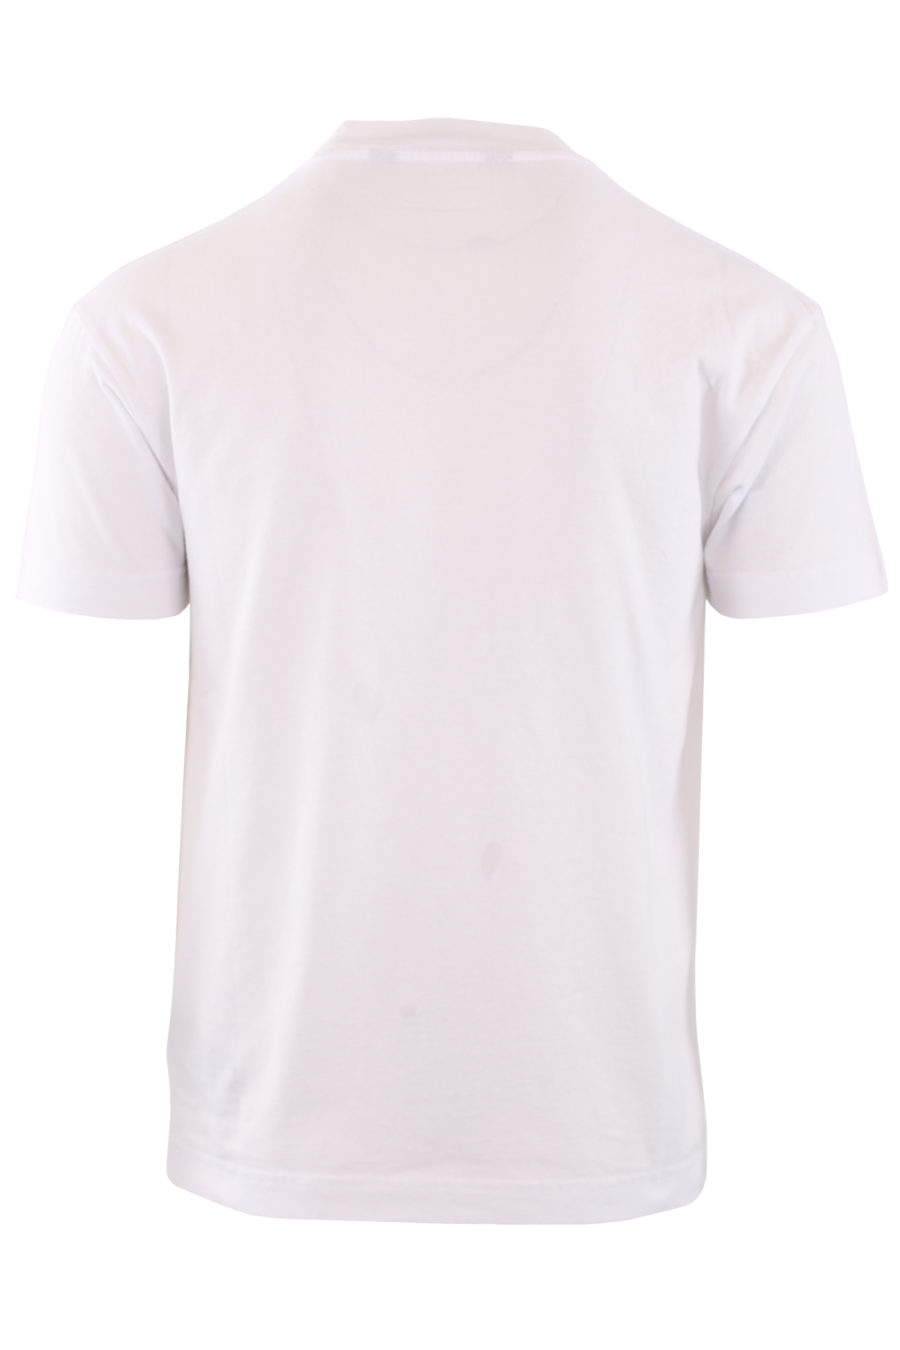 Camiseta blanca con motivo oso y "Spray" - IMG1 9234